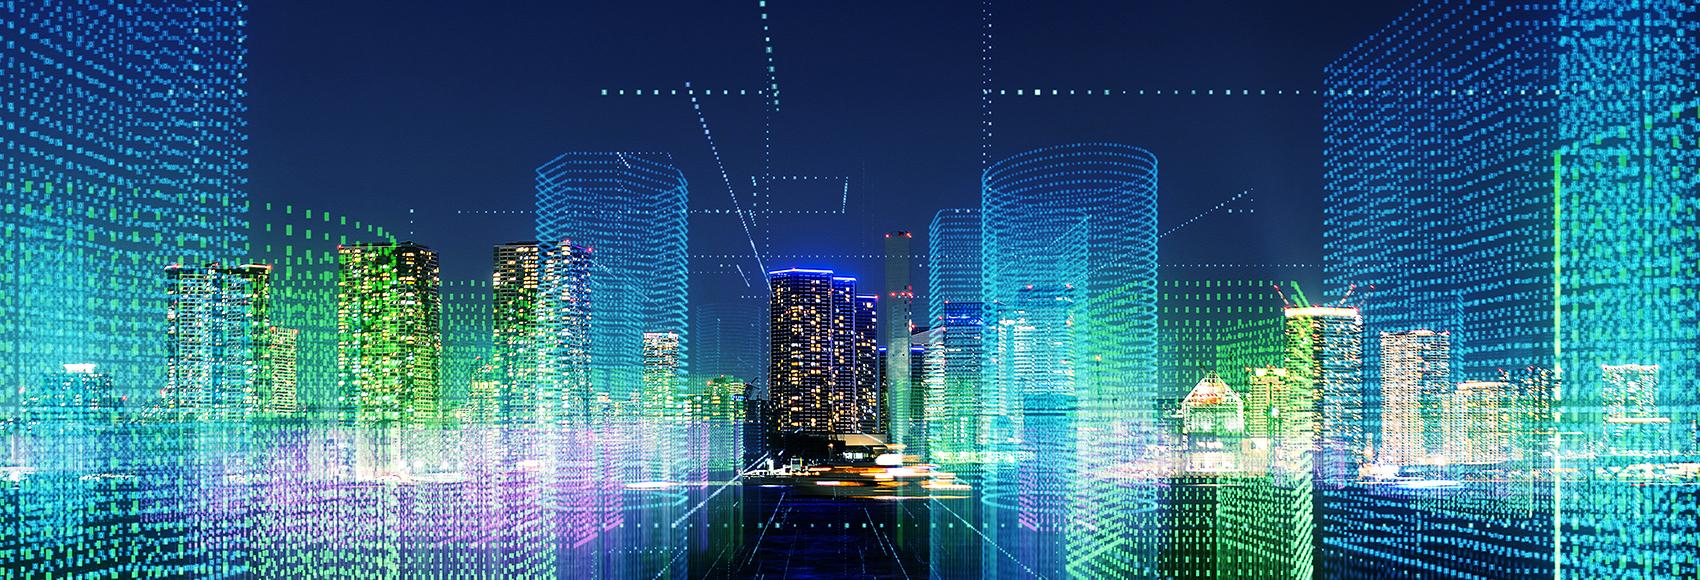 Futuristic digital city concept sketch